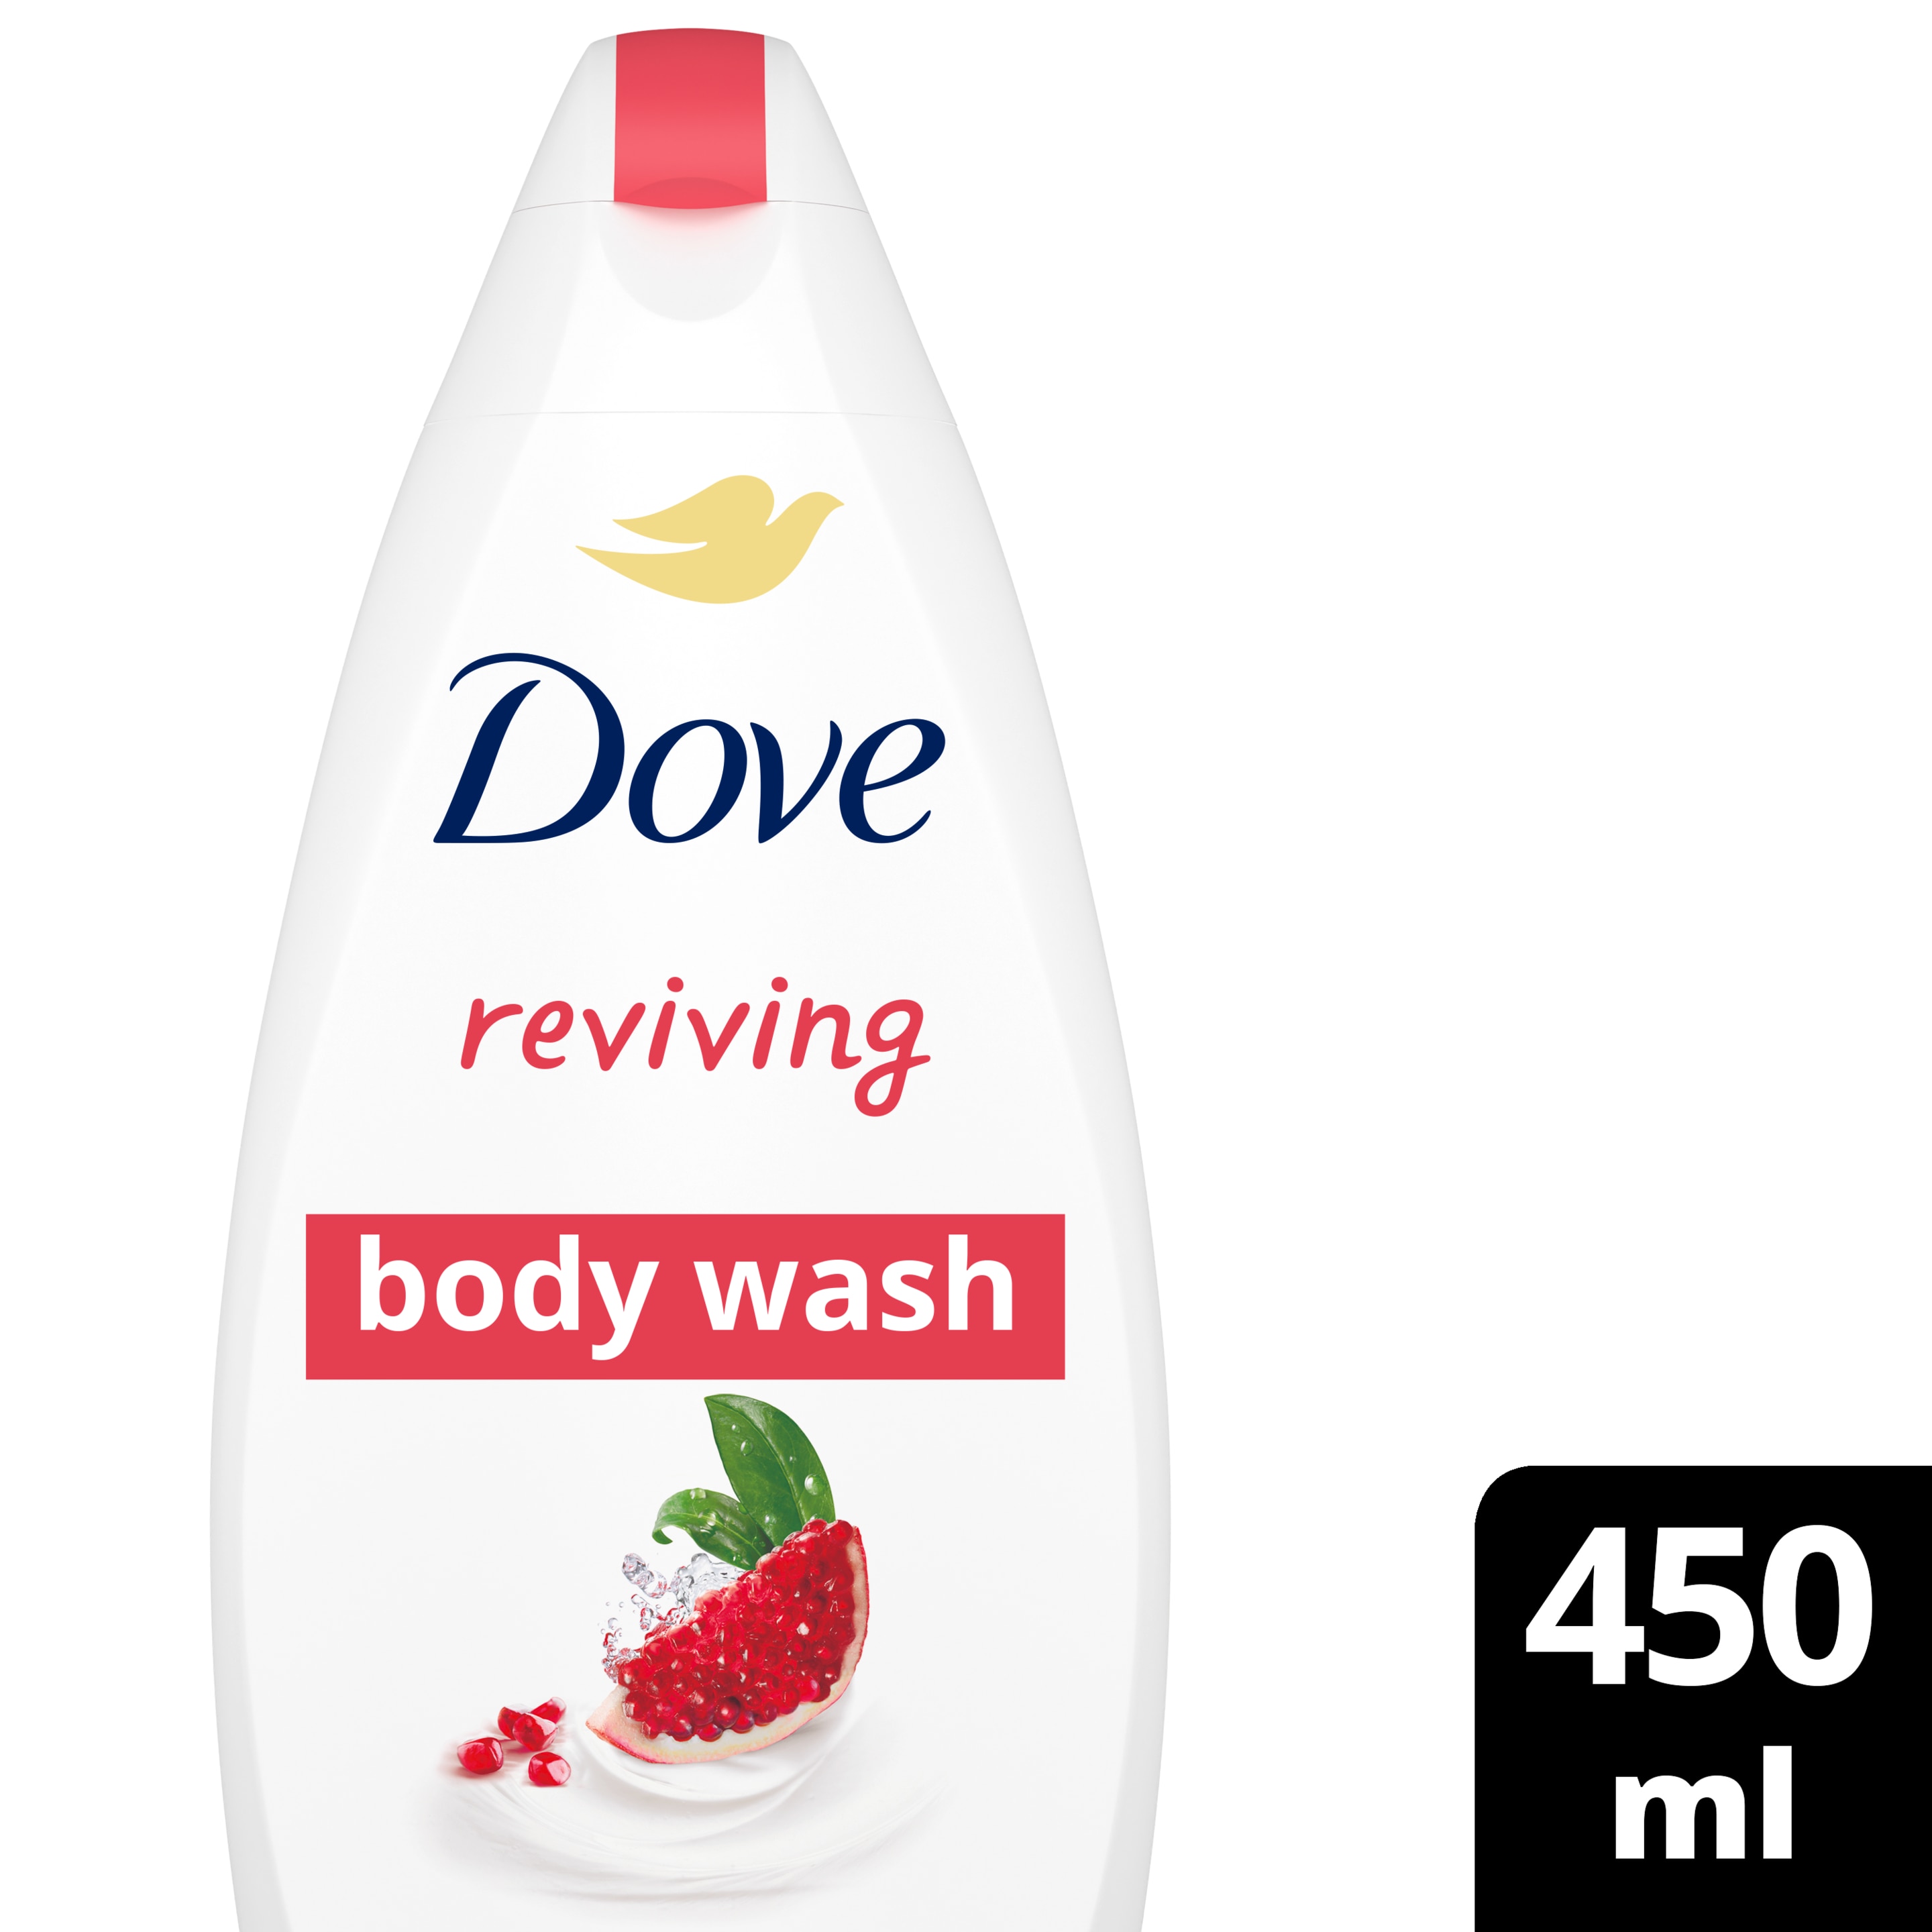 Dove Reviving Body Wash 450ml